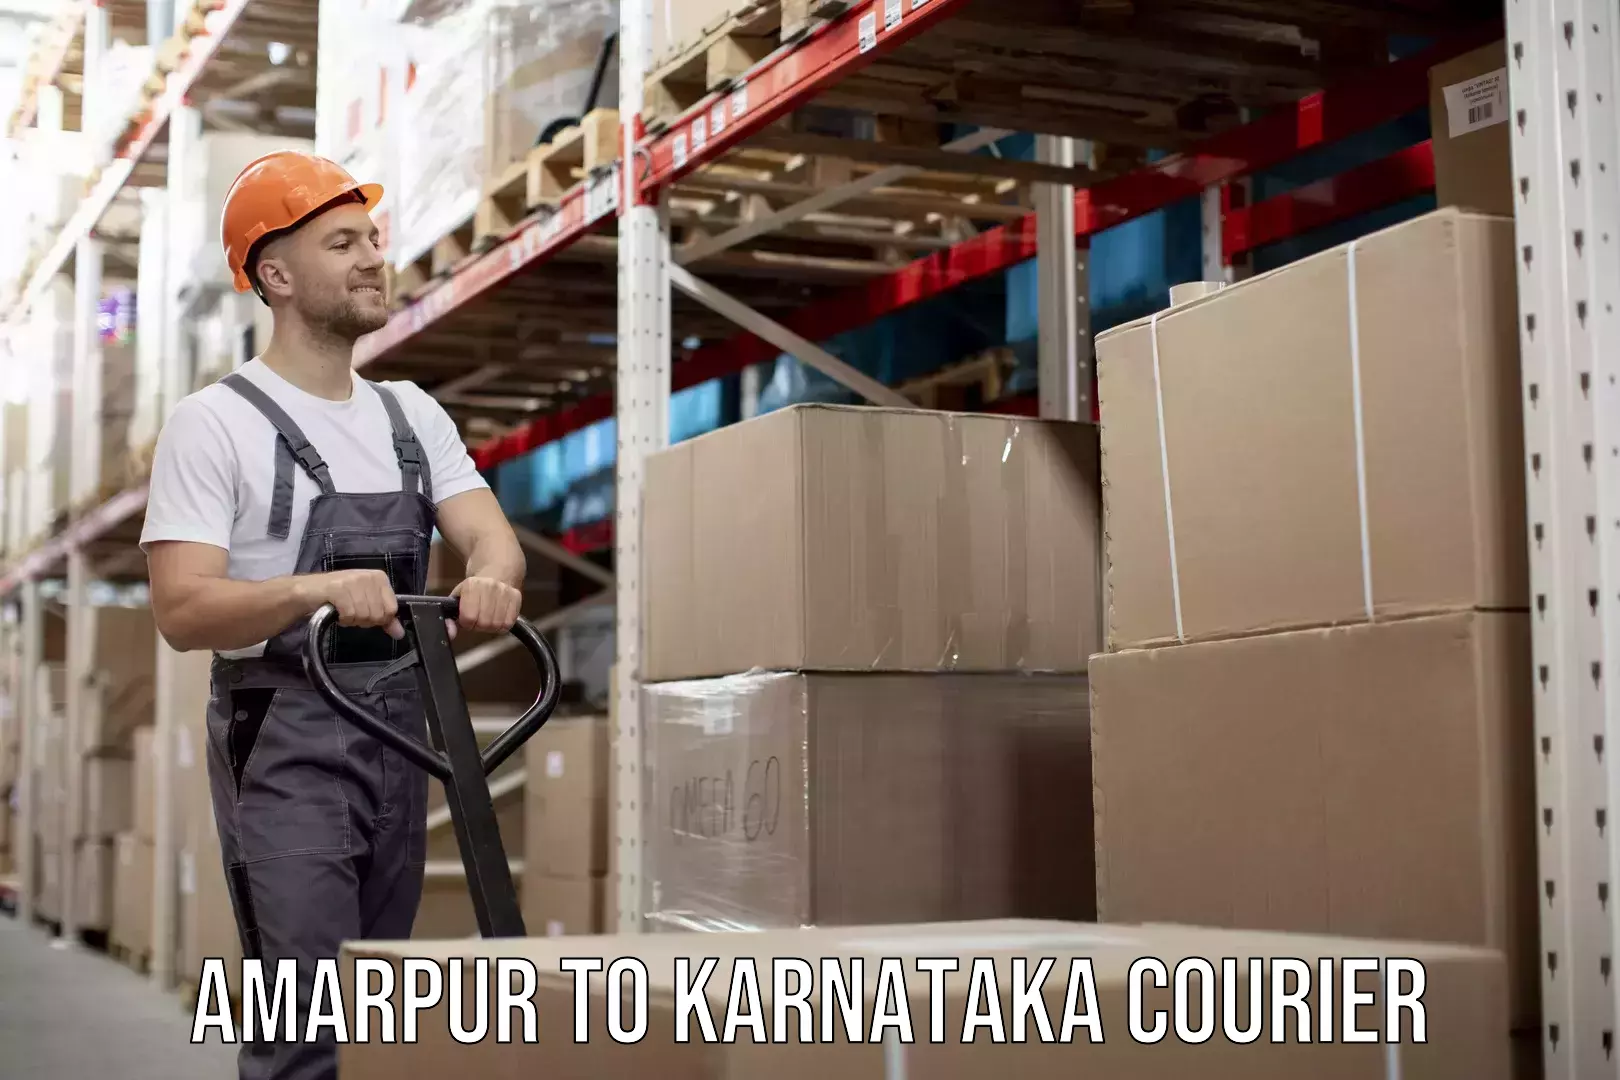 Urban courier service Amarpur to Karnataka